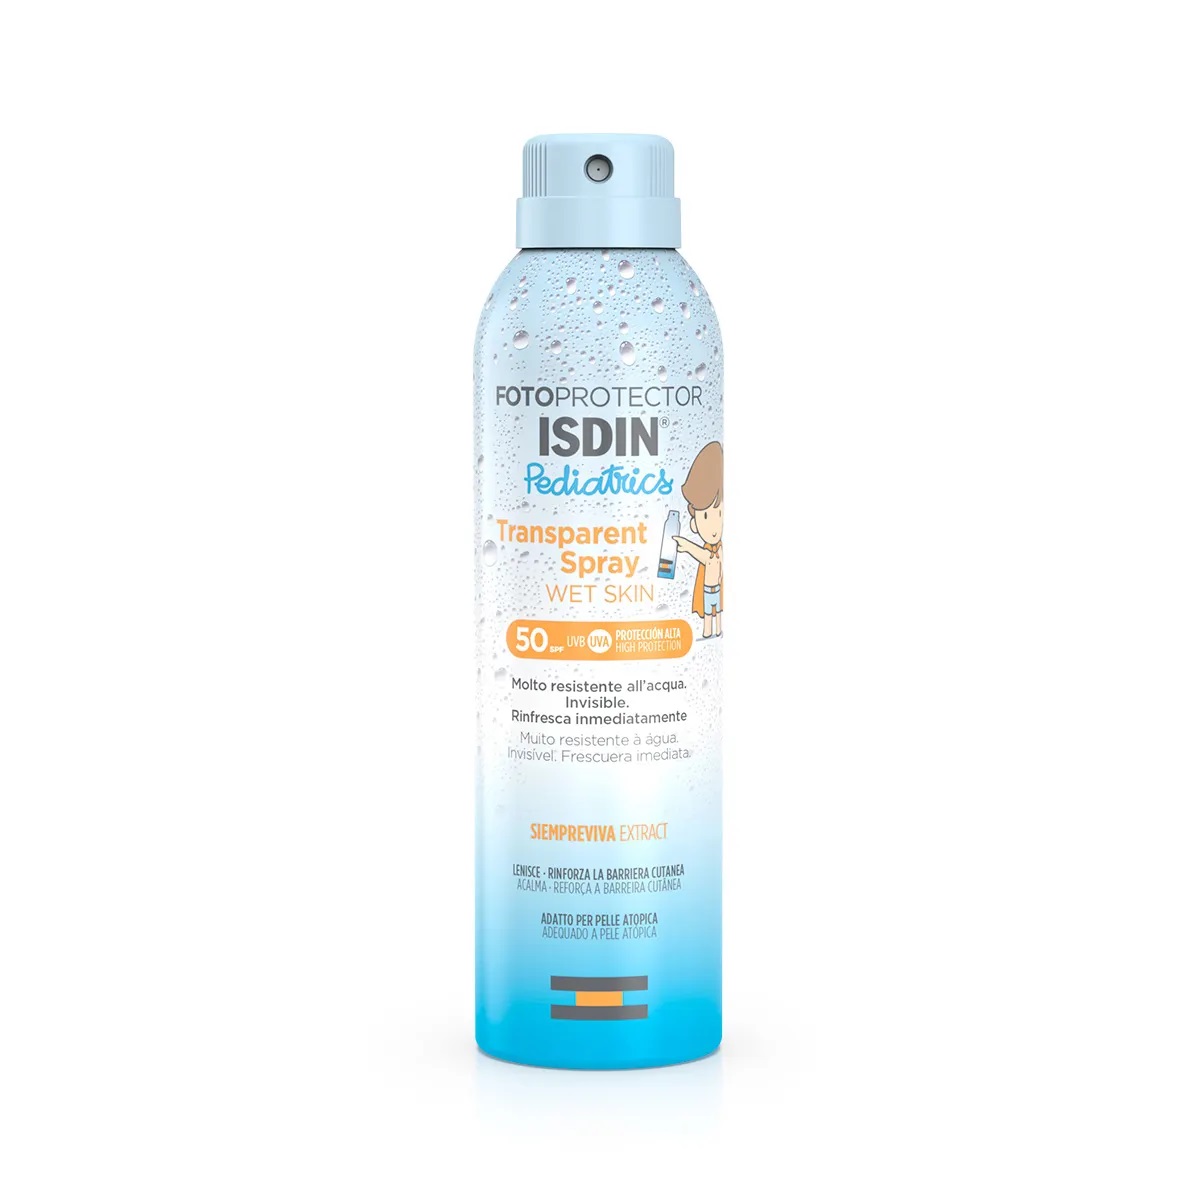 Image of Isdin Fotoprotector Pediatrics Spray Trasparente SPF50 Corpo Bambini 250ml